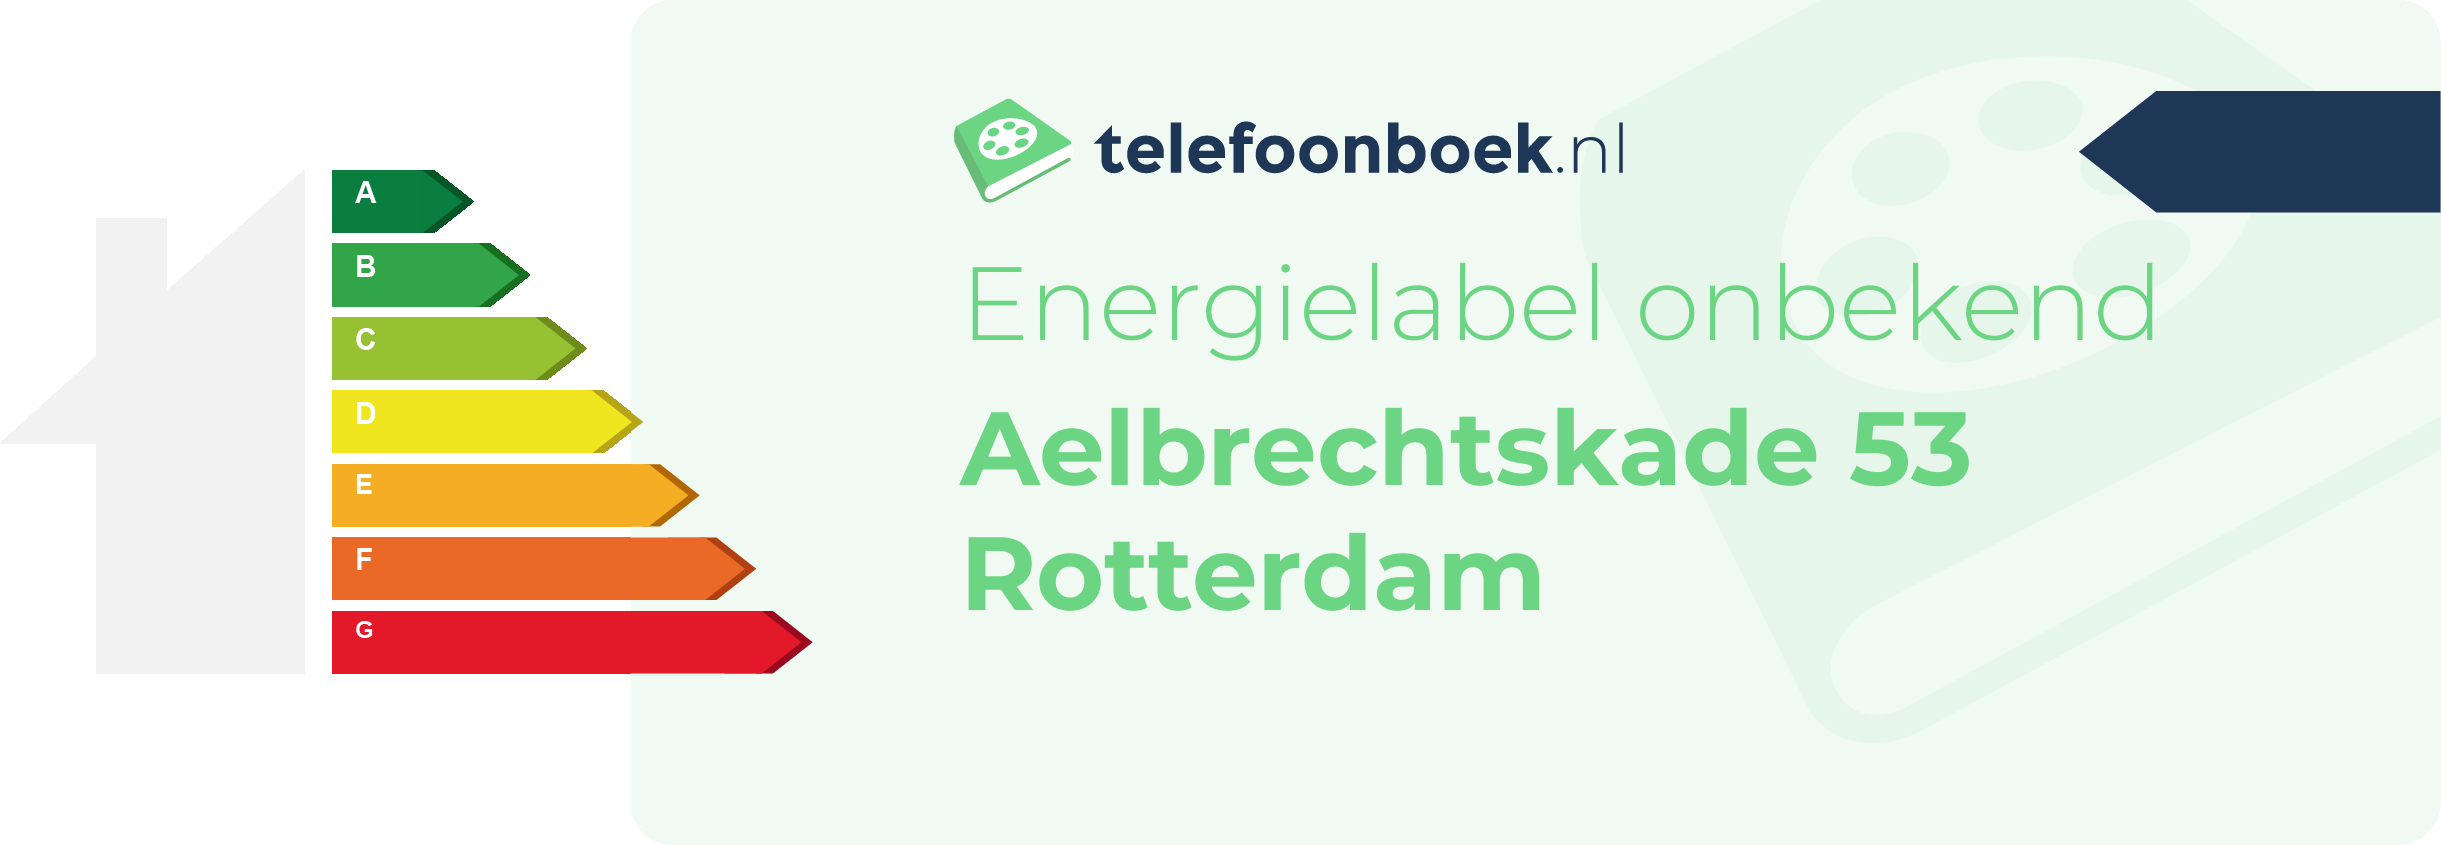 Energielabel Aelbrechtskade 53 Rotterdam